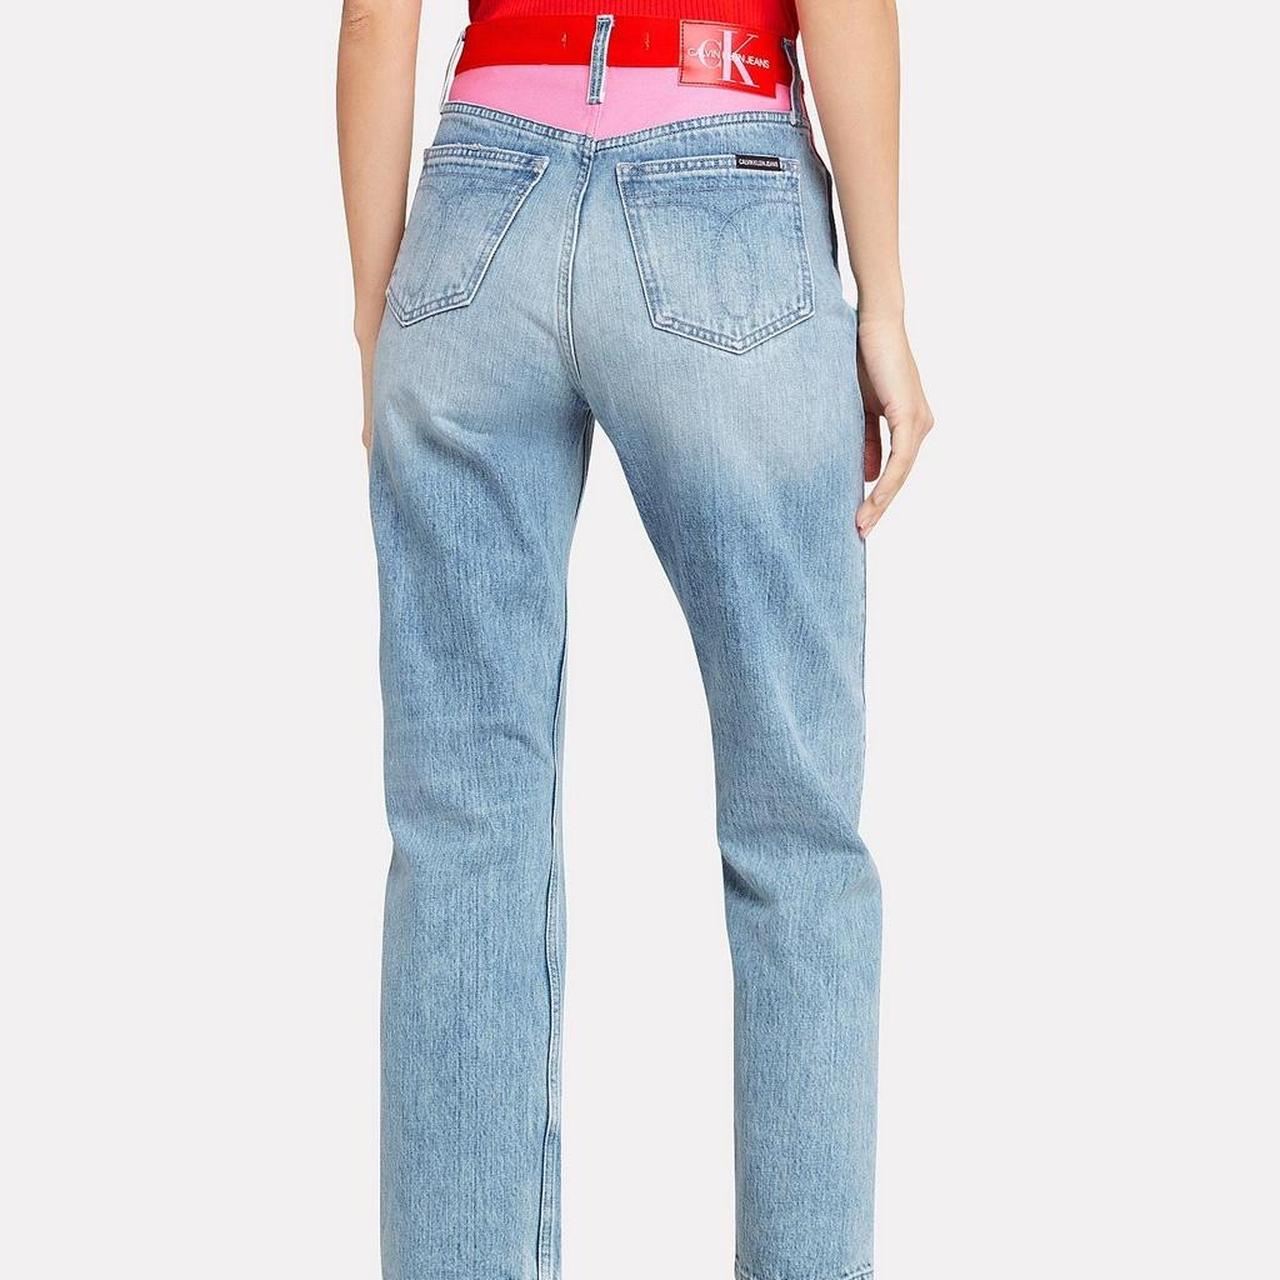 Calvin Klein Jeans Bold colorblock Multicolore - Livraison